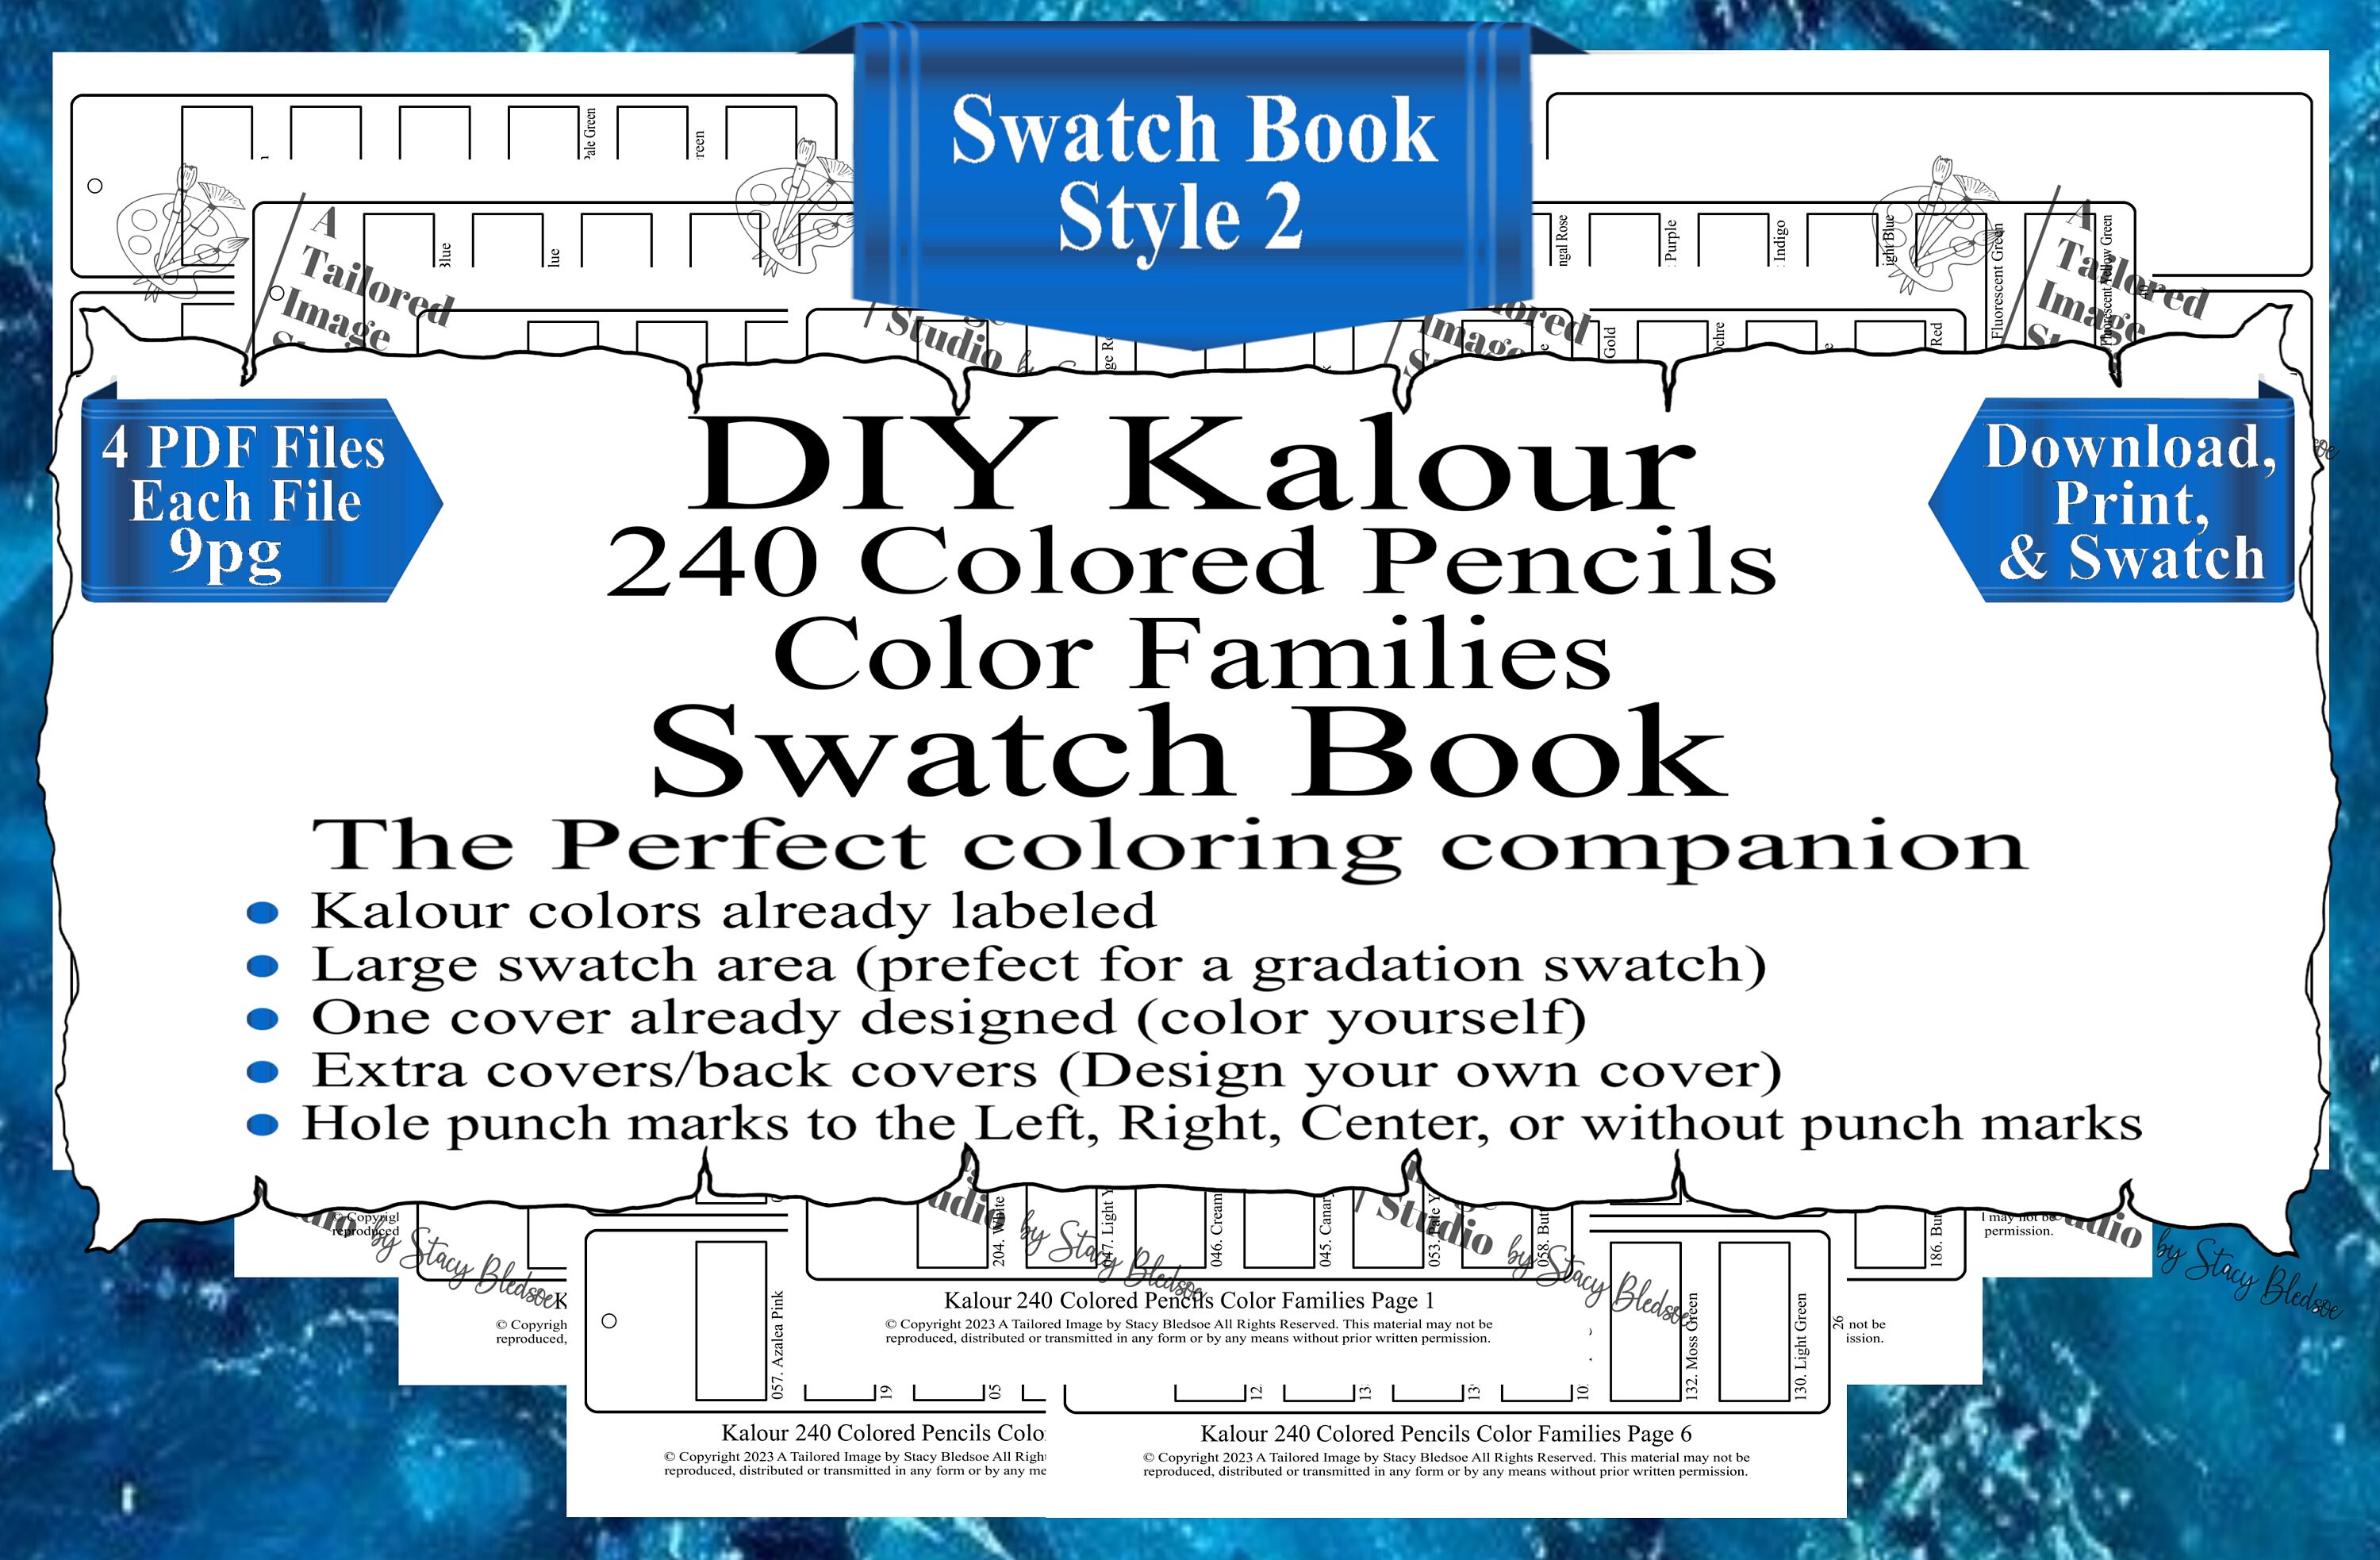 Kalour 520 Soft Touch Premium Colored Pencils DIY Color Swatch Book Style 1  